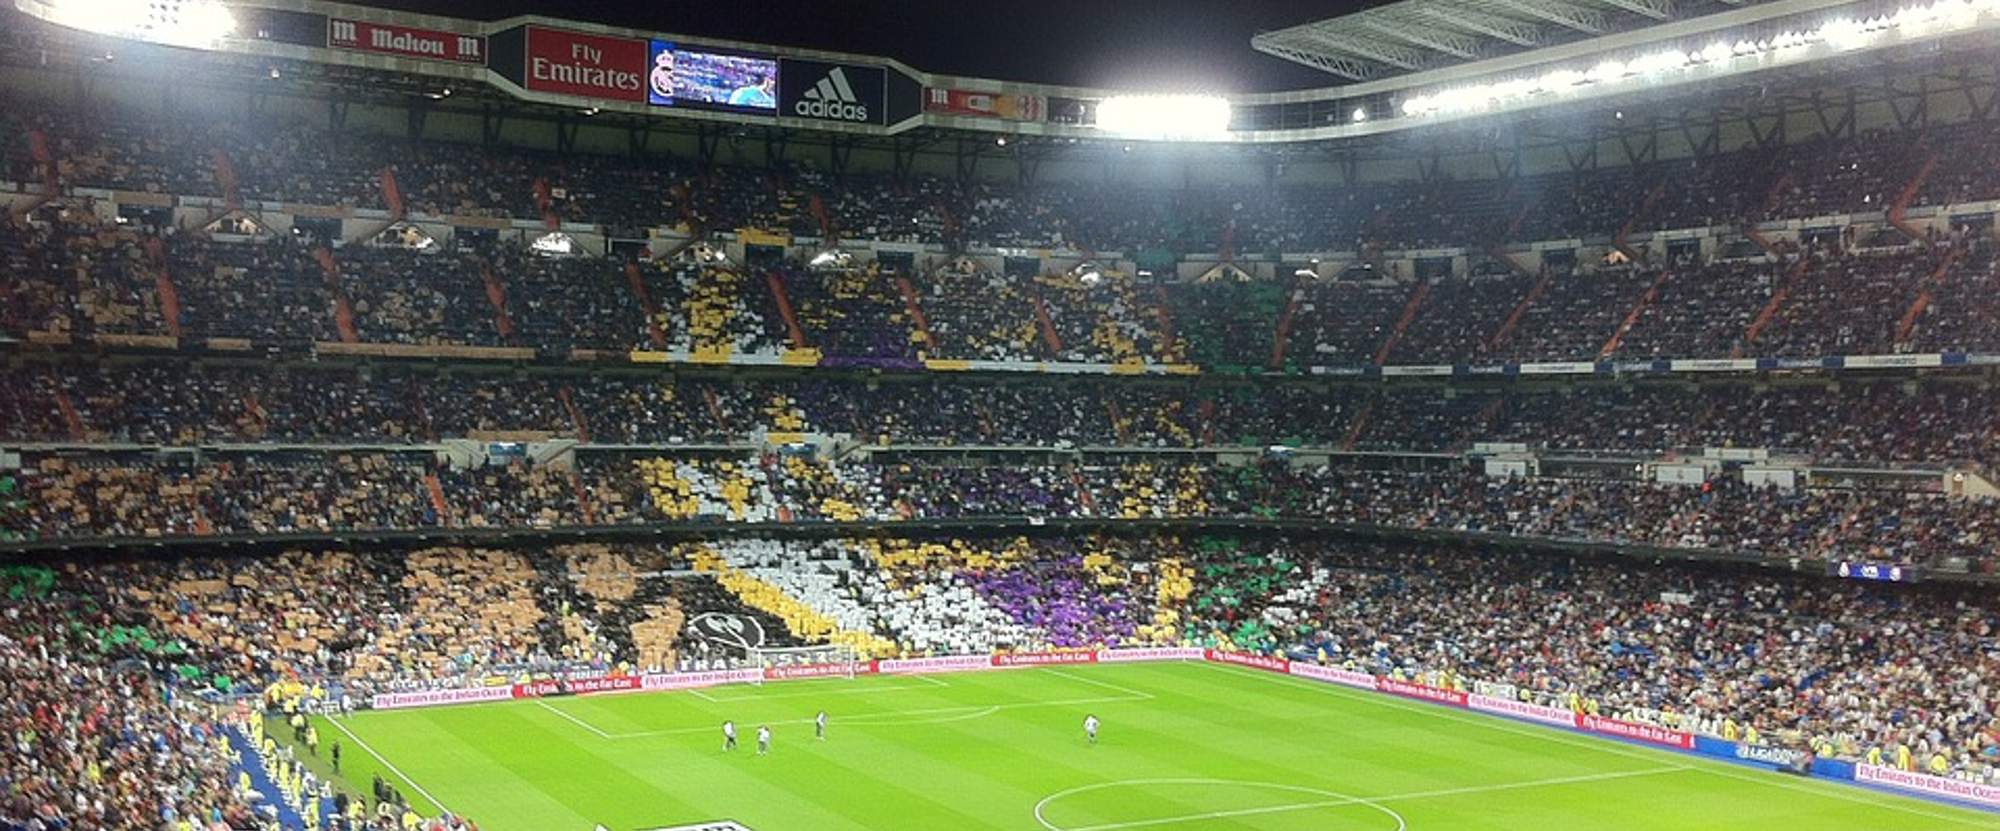 Real Madrid v Athletic Bilbao